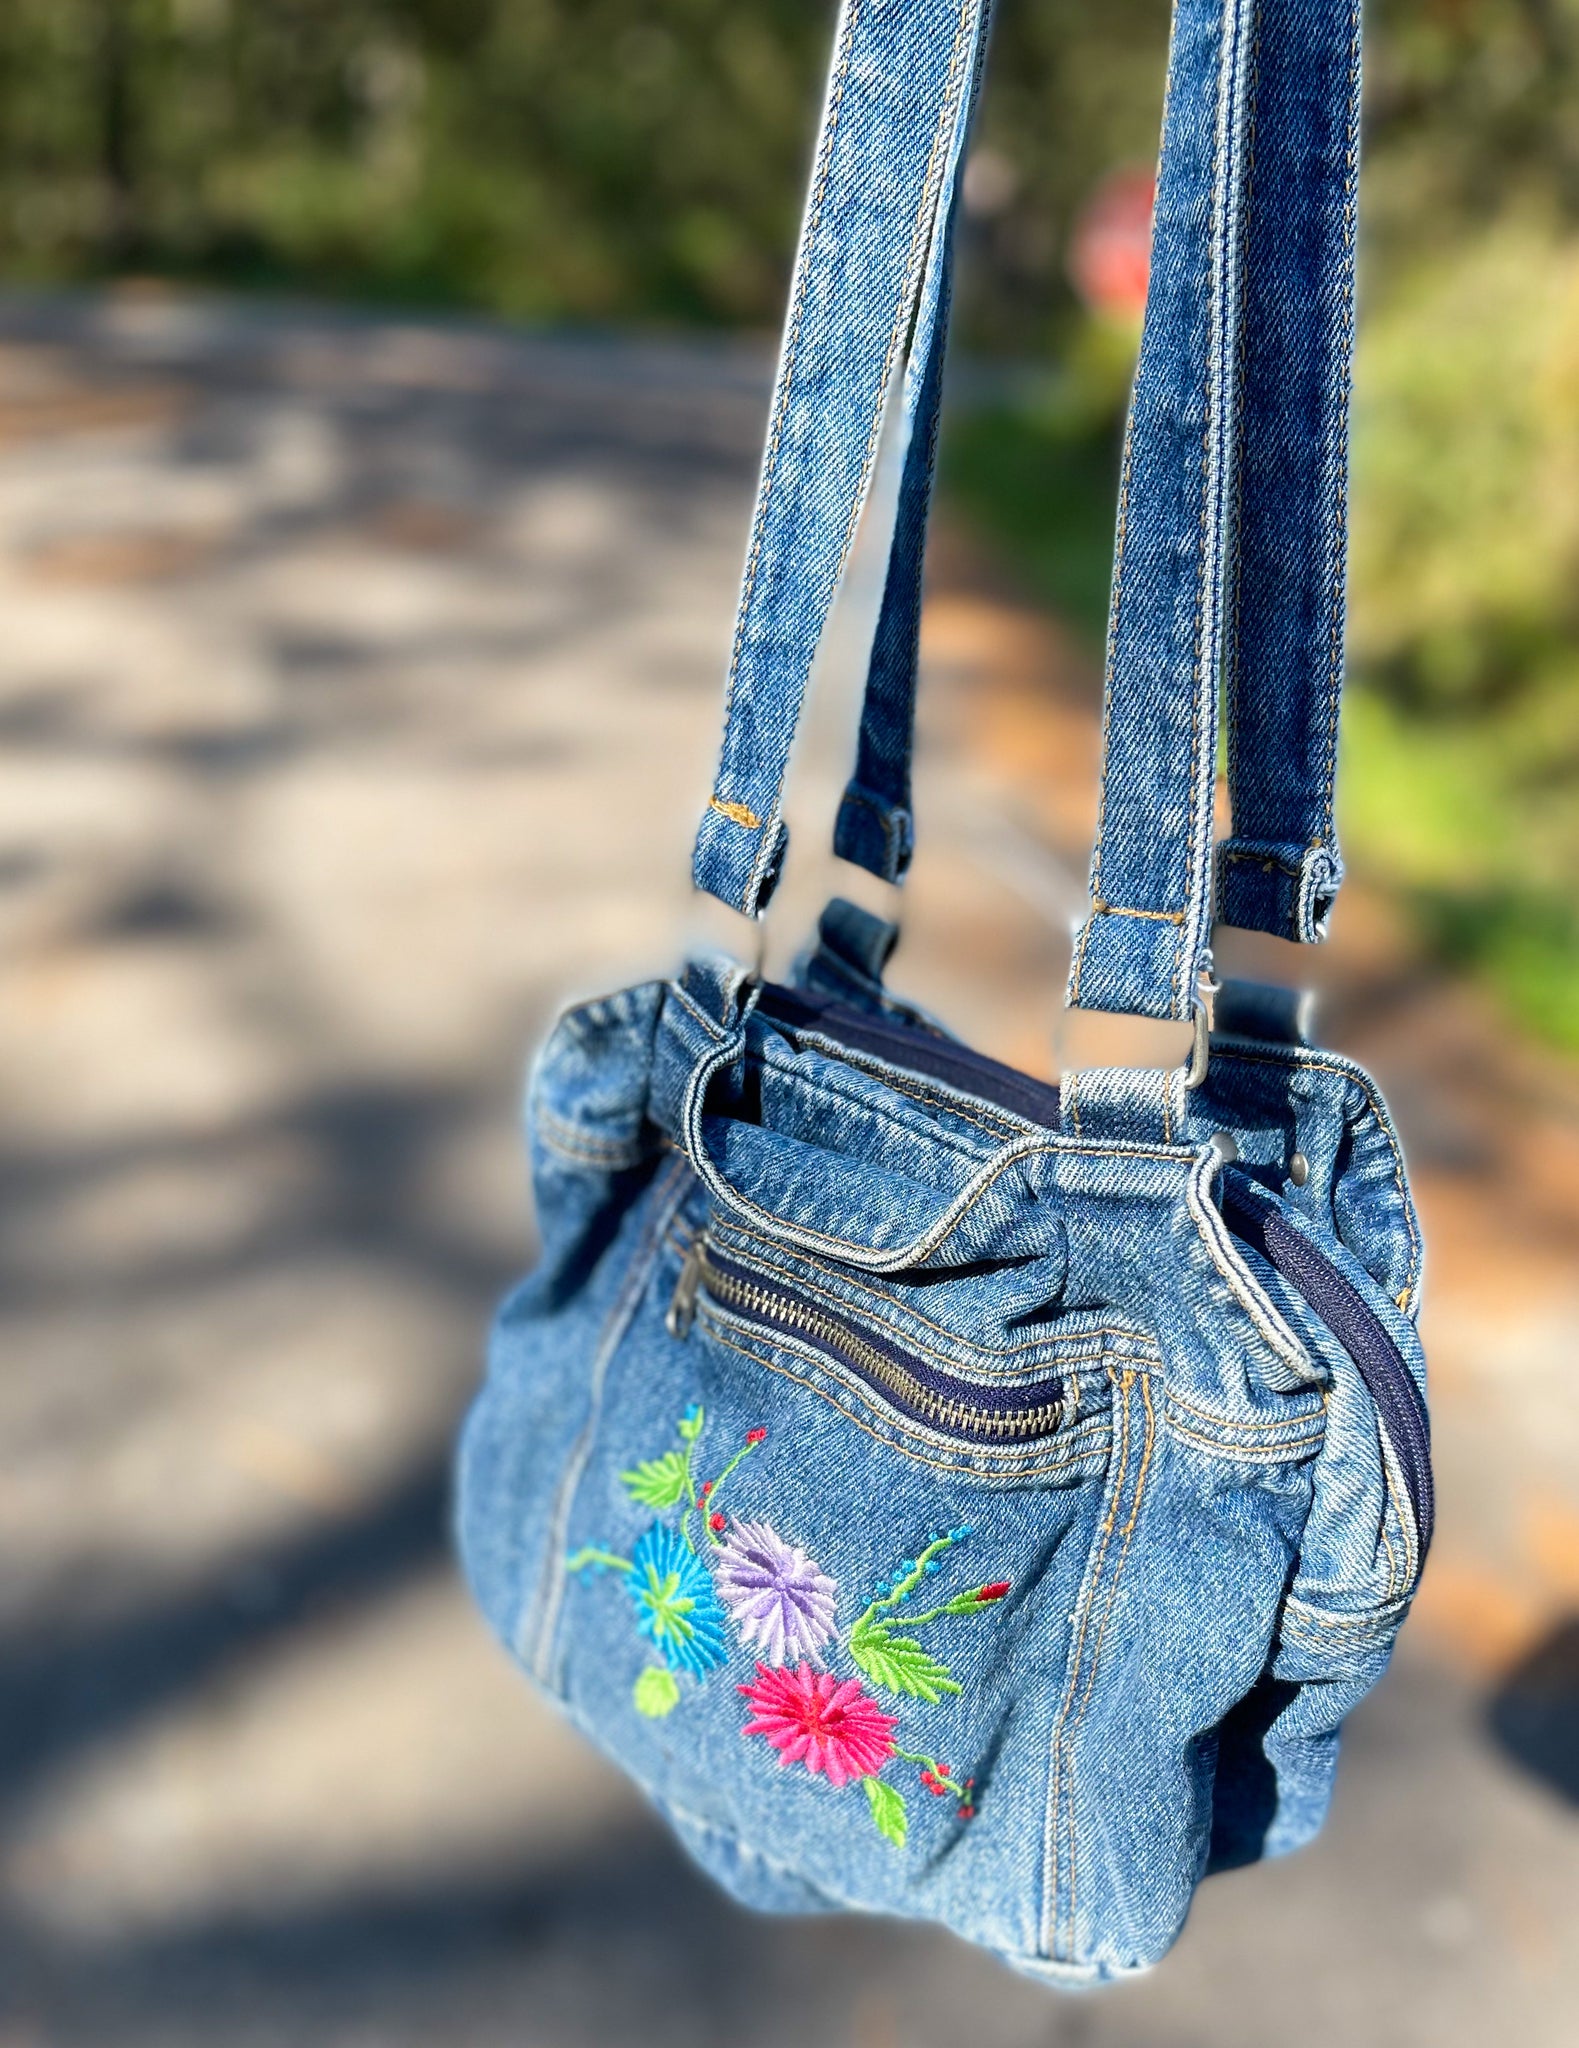 Tote Bag Sewing Pattern, Jeans Handbag With Folded Sides, DIY Denim Bag  Printable PDF Pattern and Instructions, Easy Tutorial Ebook Download - Etsy